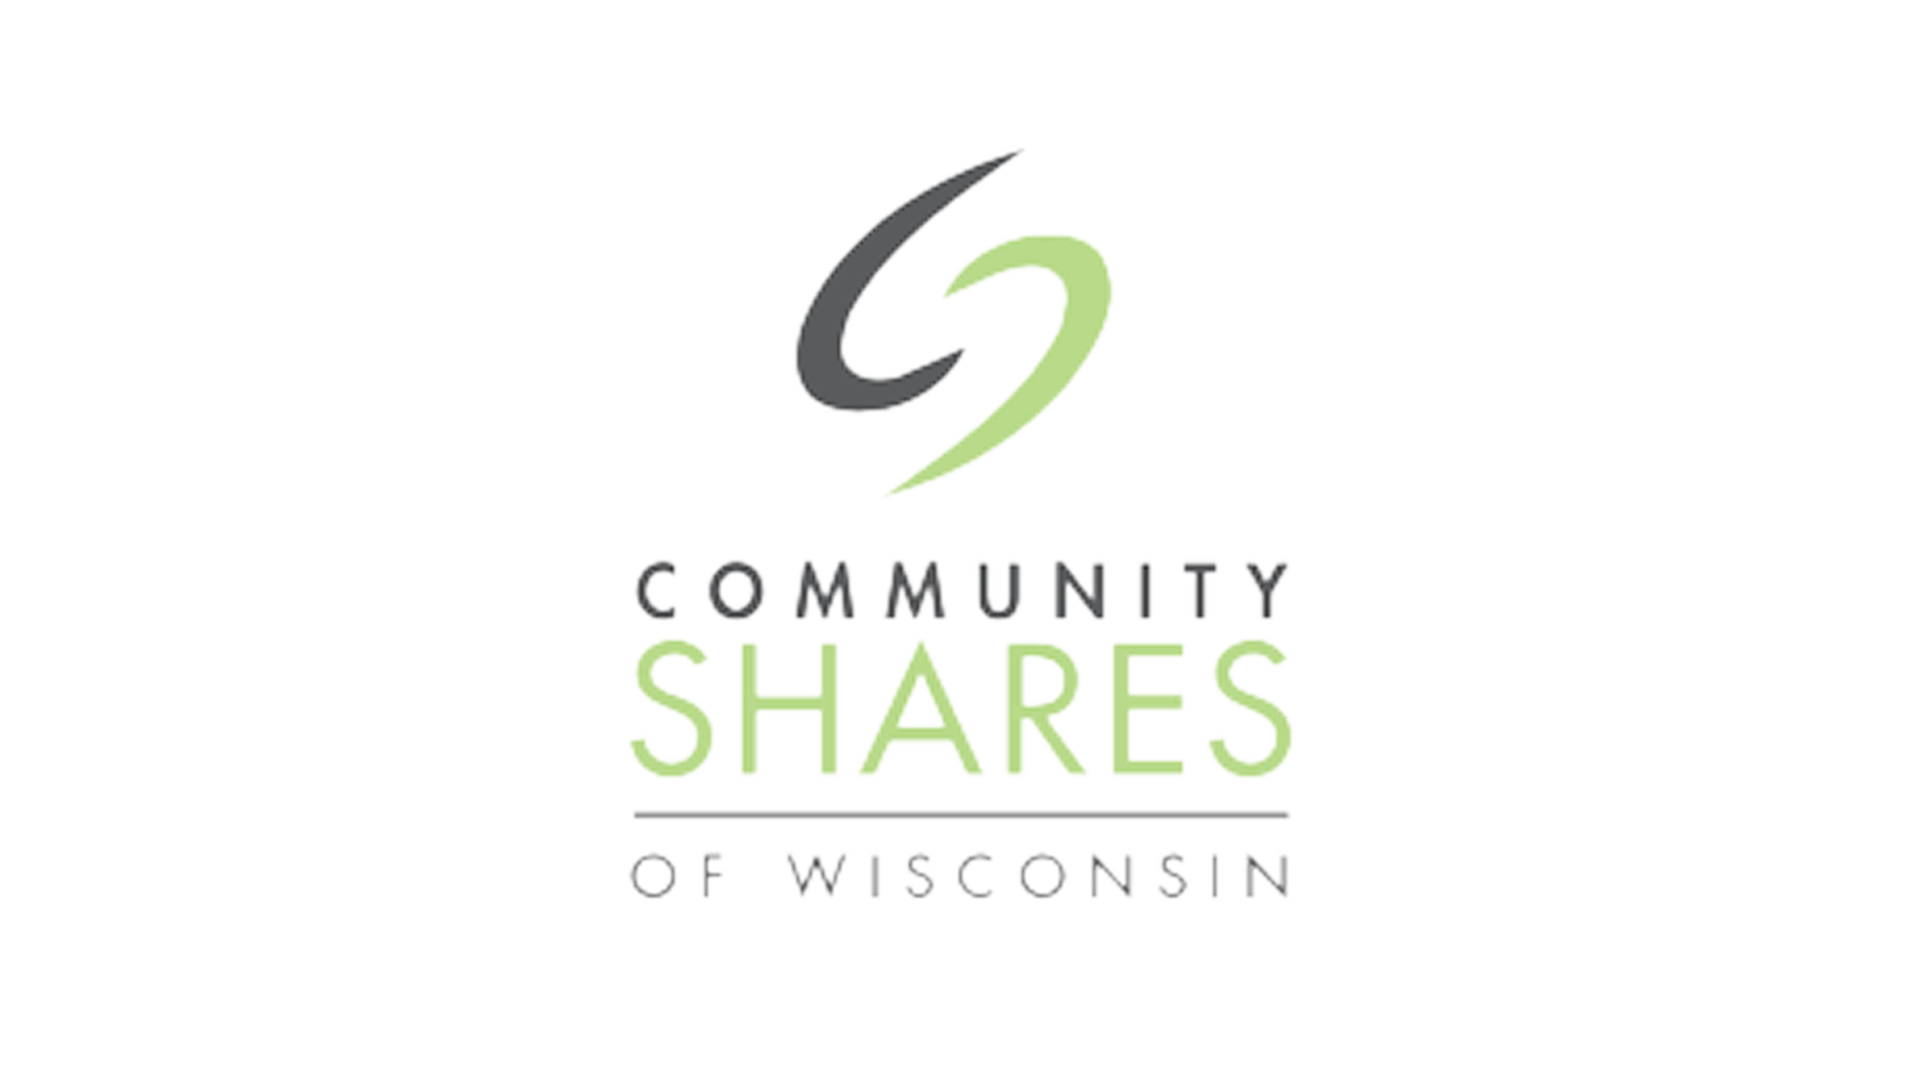 Community Shares of Wisconsin Logo